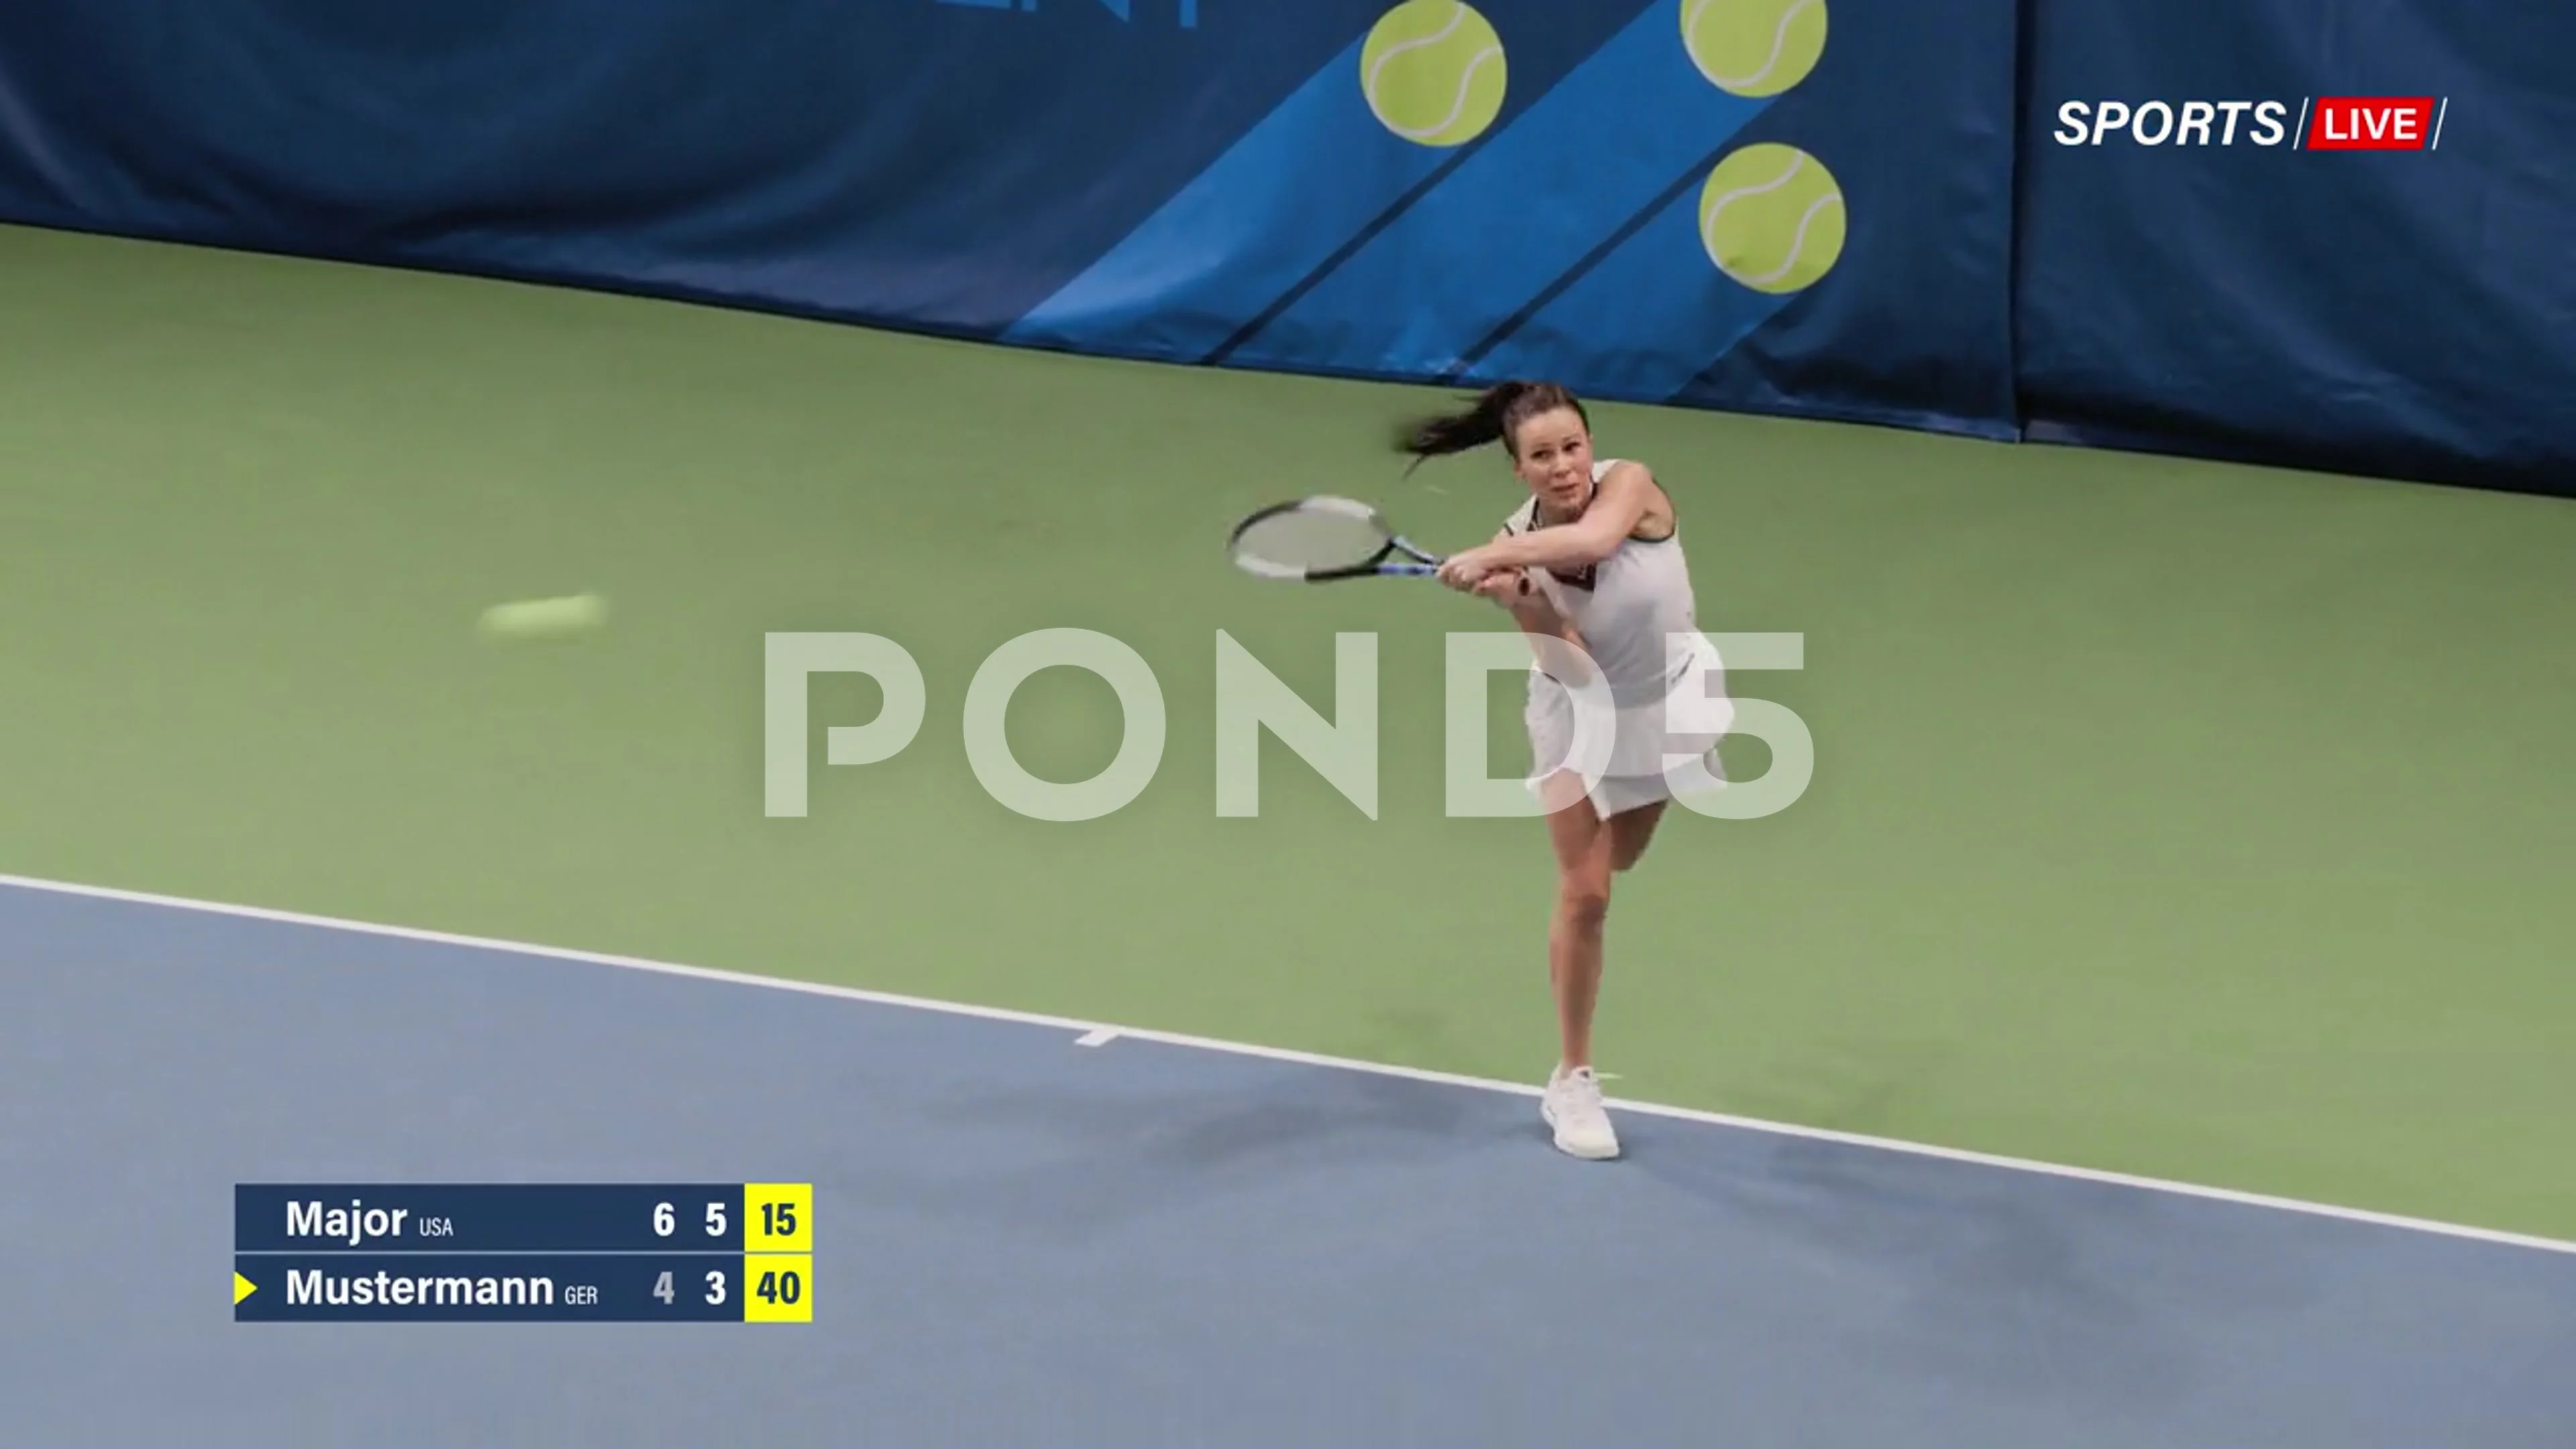 50 FPS TV Match Female Tennis Stock Video Pond5